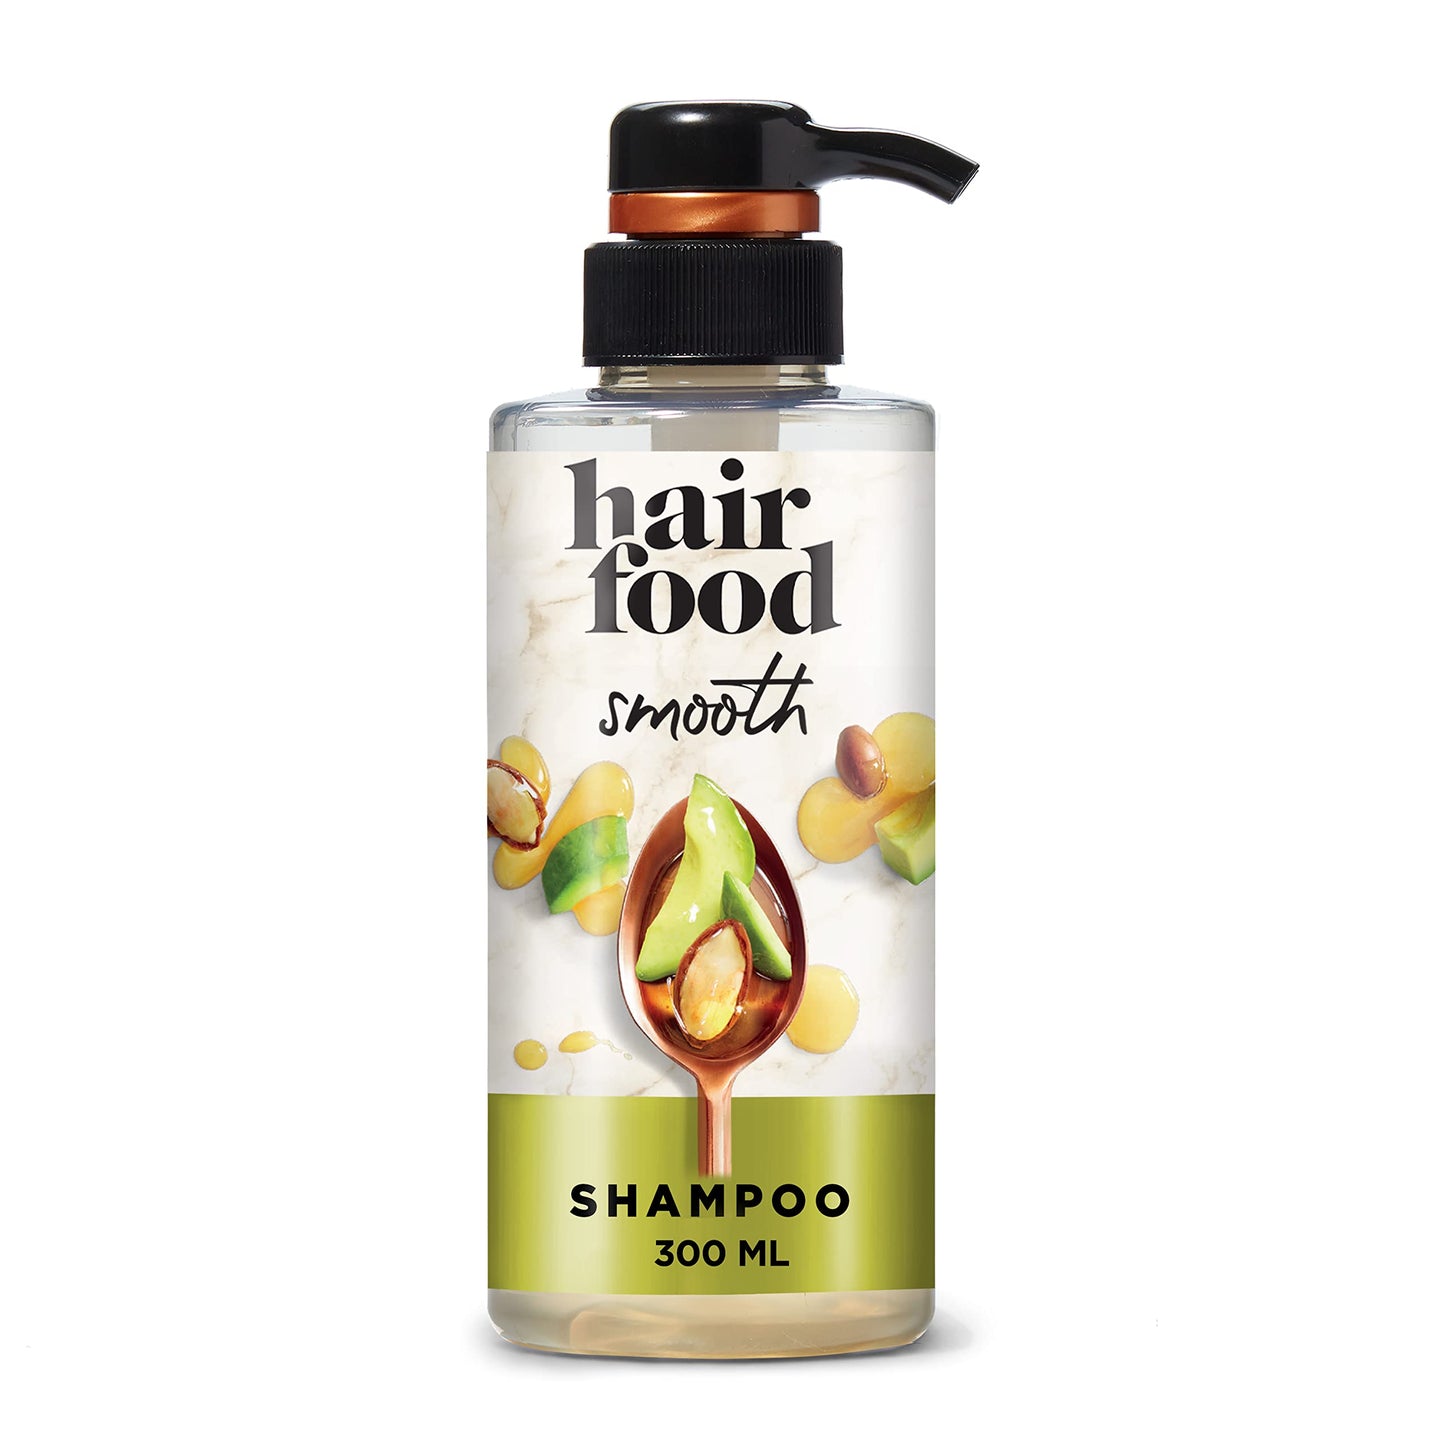 Hair Food Sulfate Free Shampoo with Avocado & Argan Oil, 300 ml